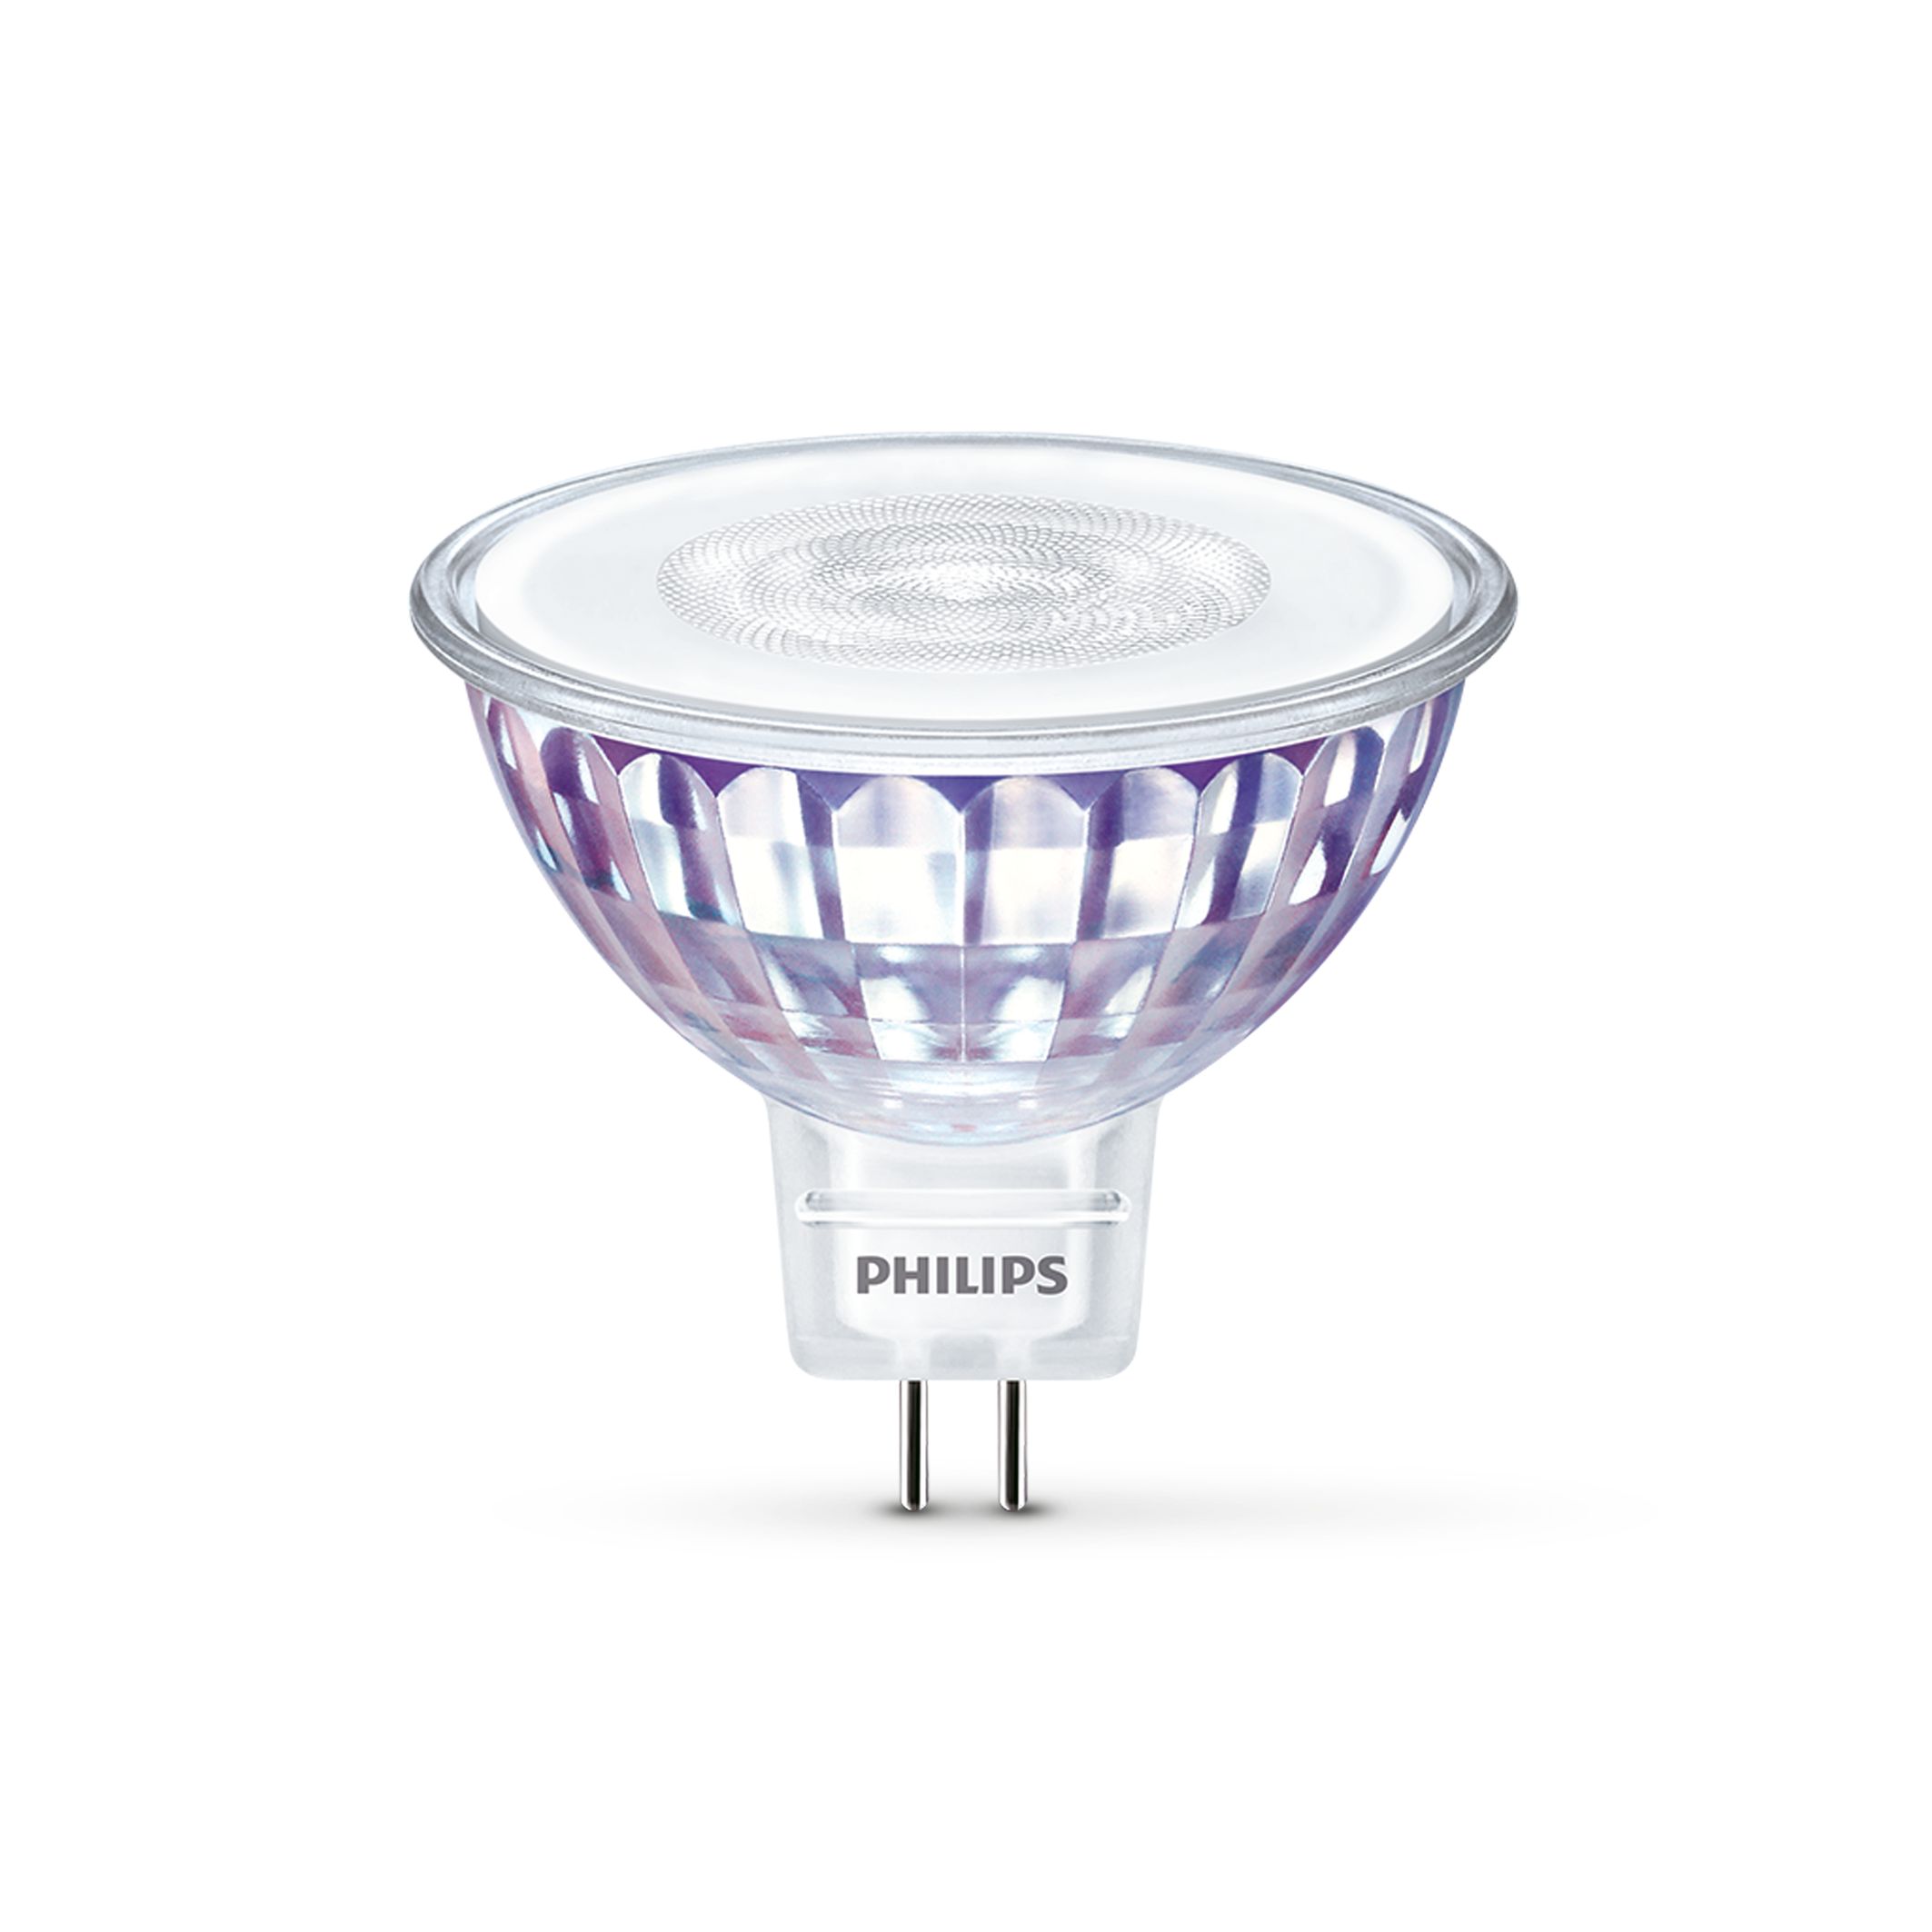 3 x LED de Philips 2W 200lm 12v Blanco Cálido 2700K 20W G4 Cápsula Bombillas A 